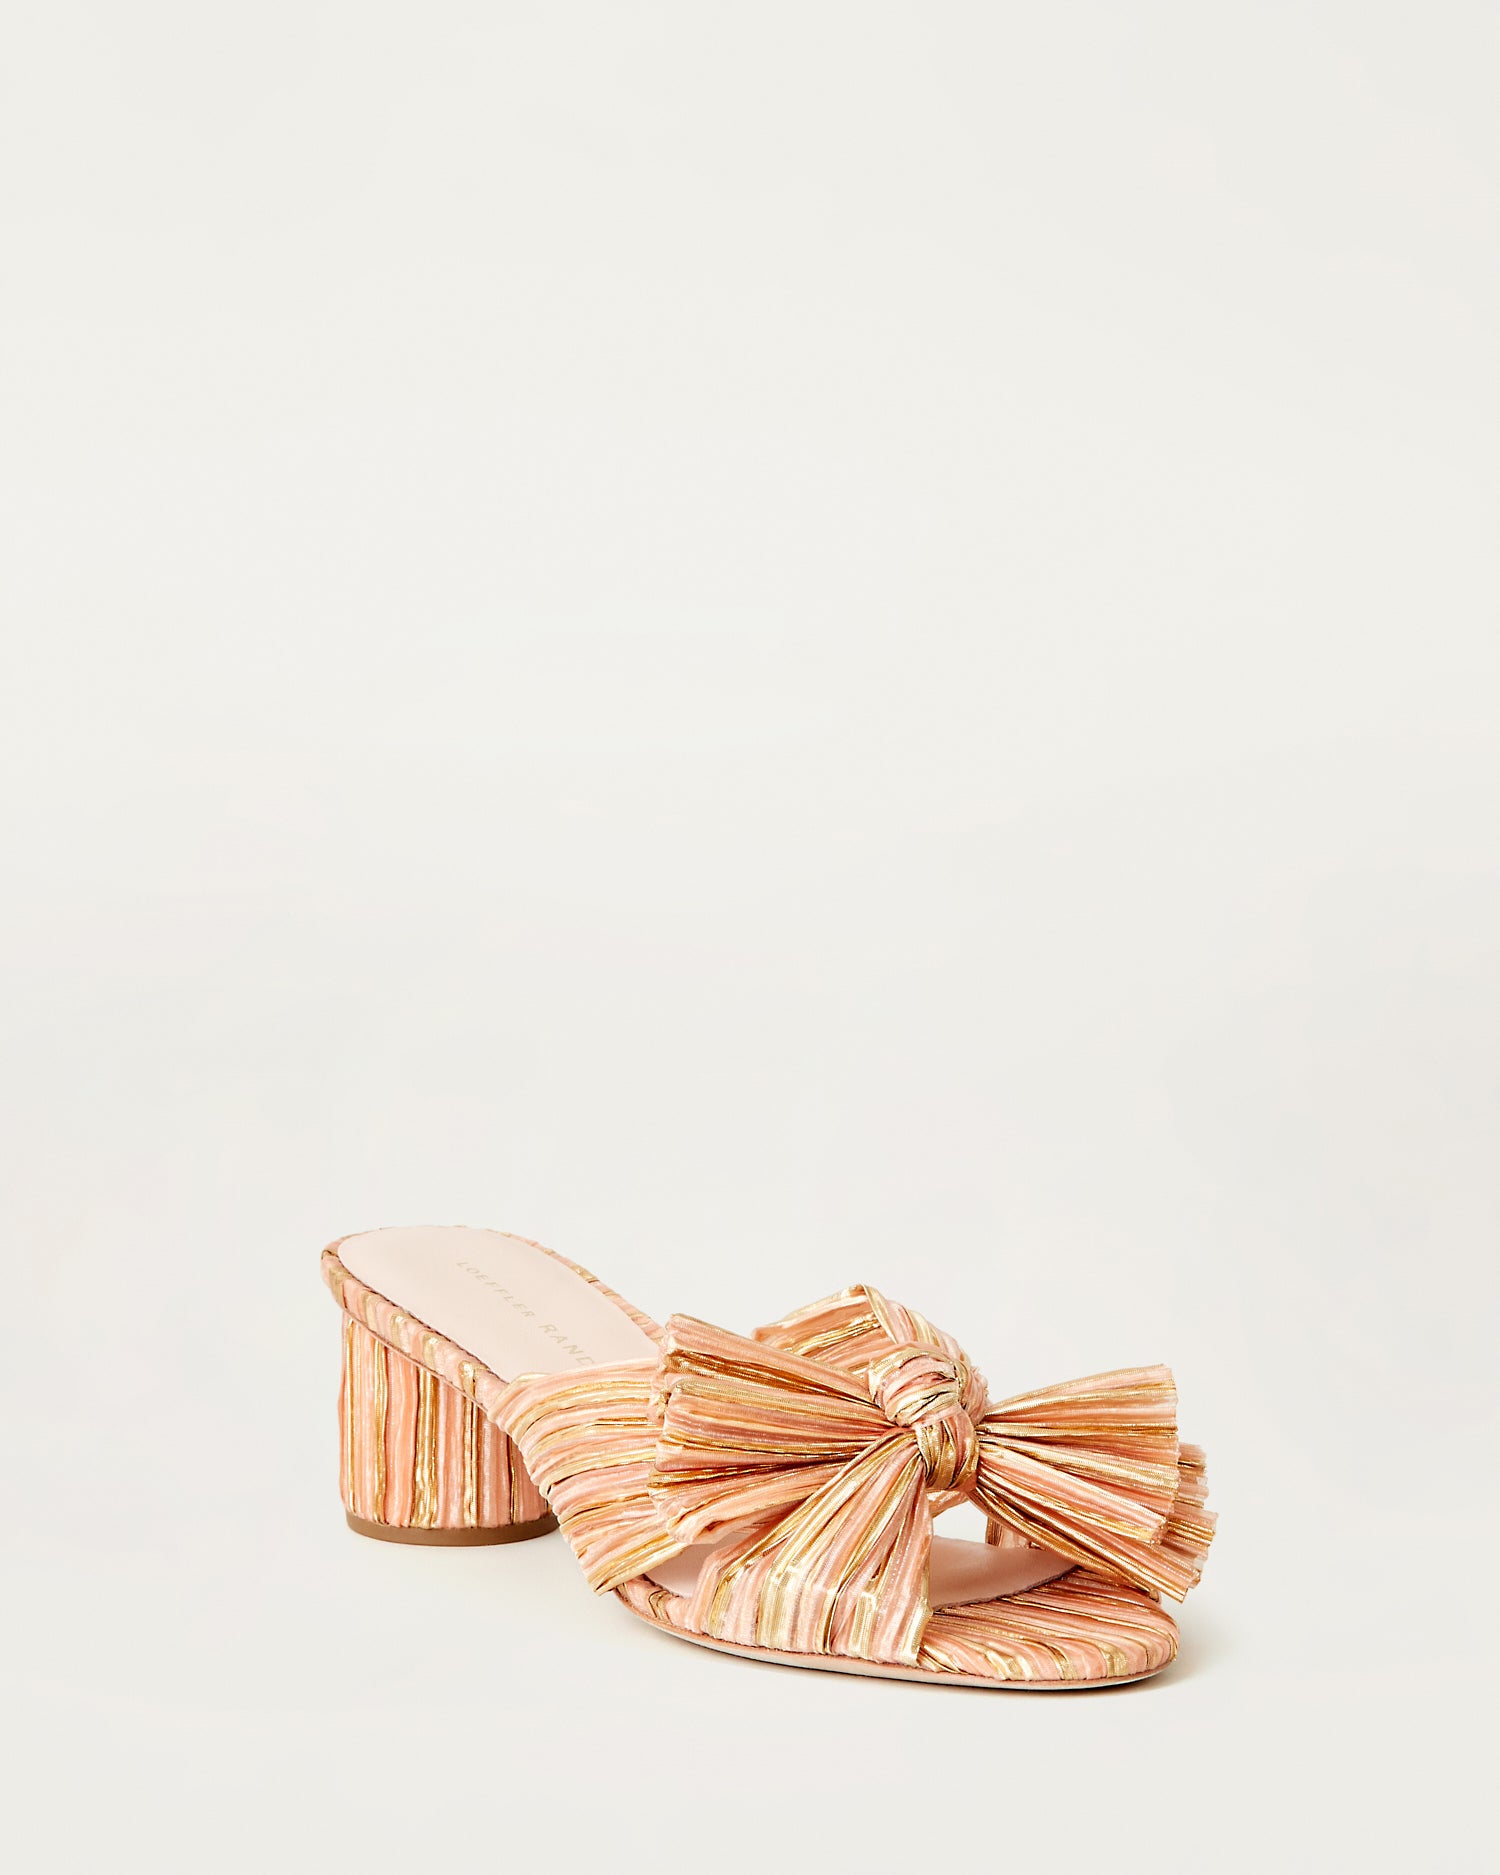 loeffler randall rose gold sandals